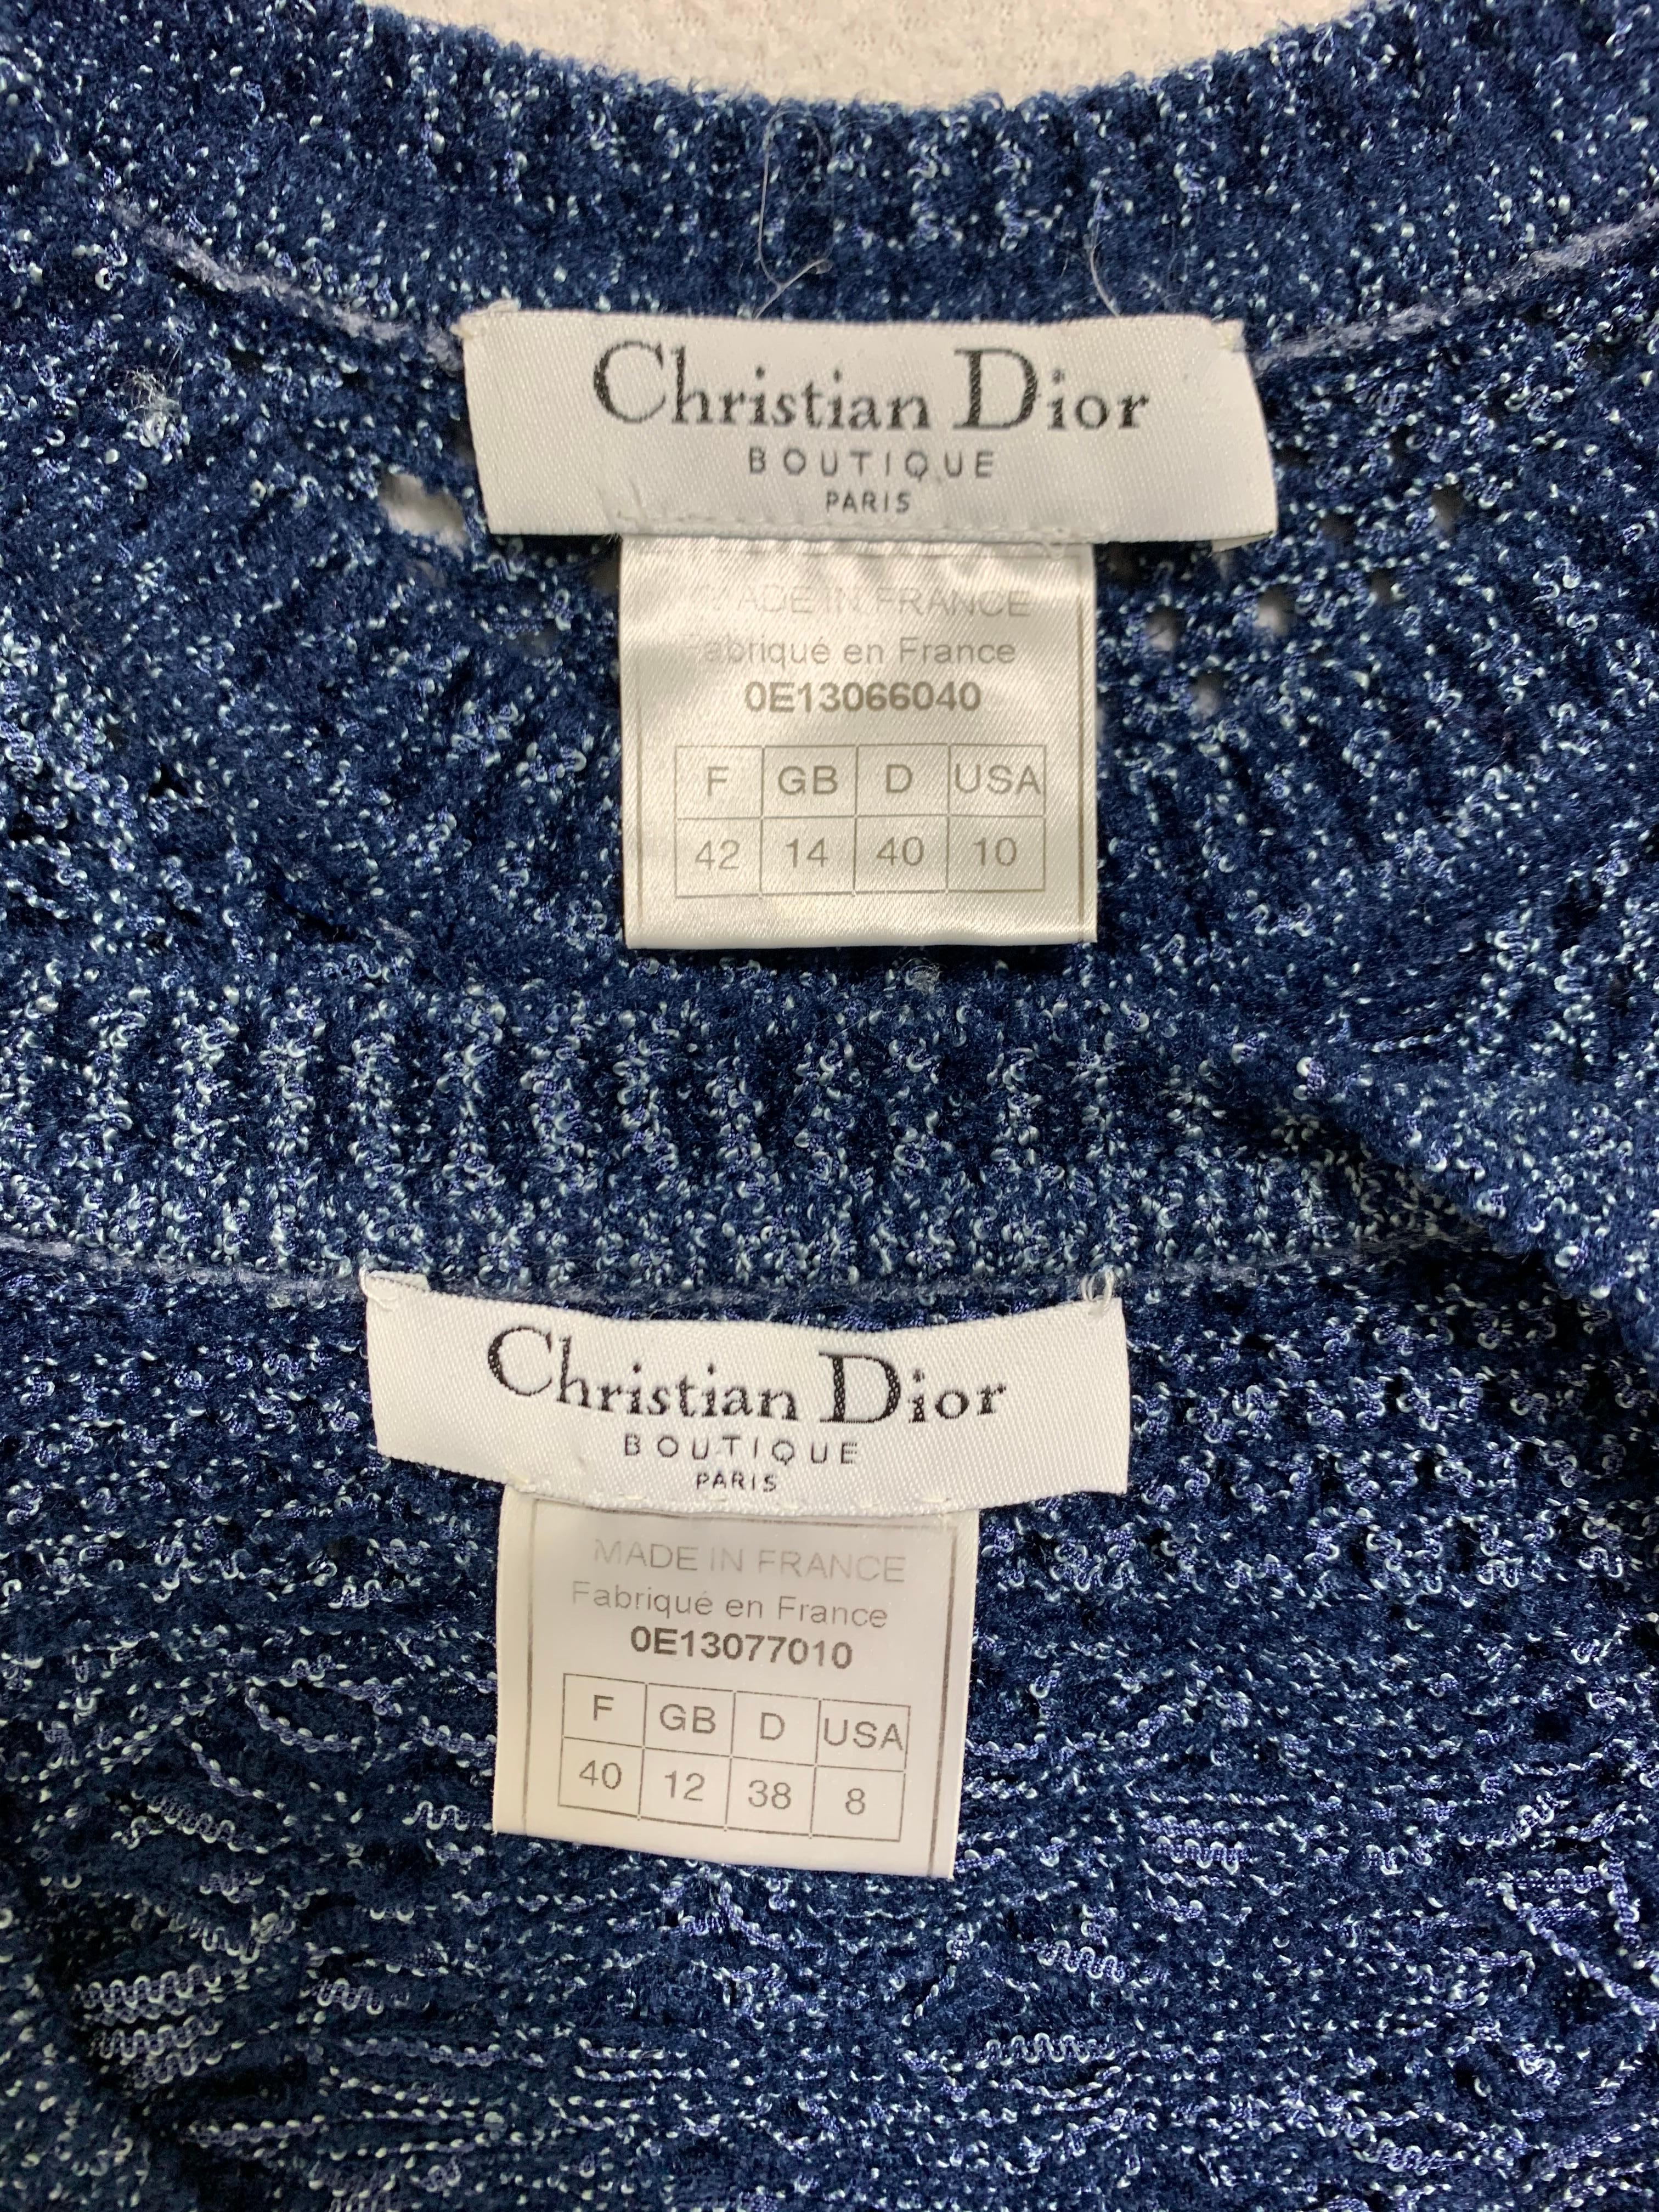 S/S 2000 Christian Dior John Galliano Runway Sheer Blue Knit Dress & Jacket 1